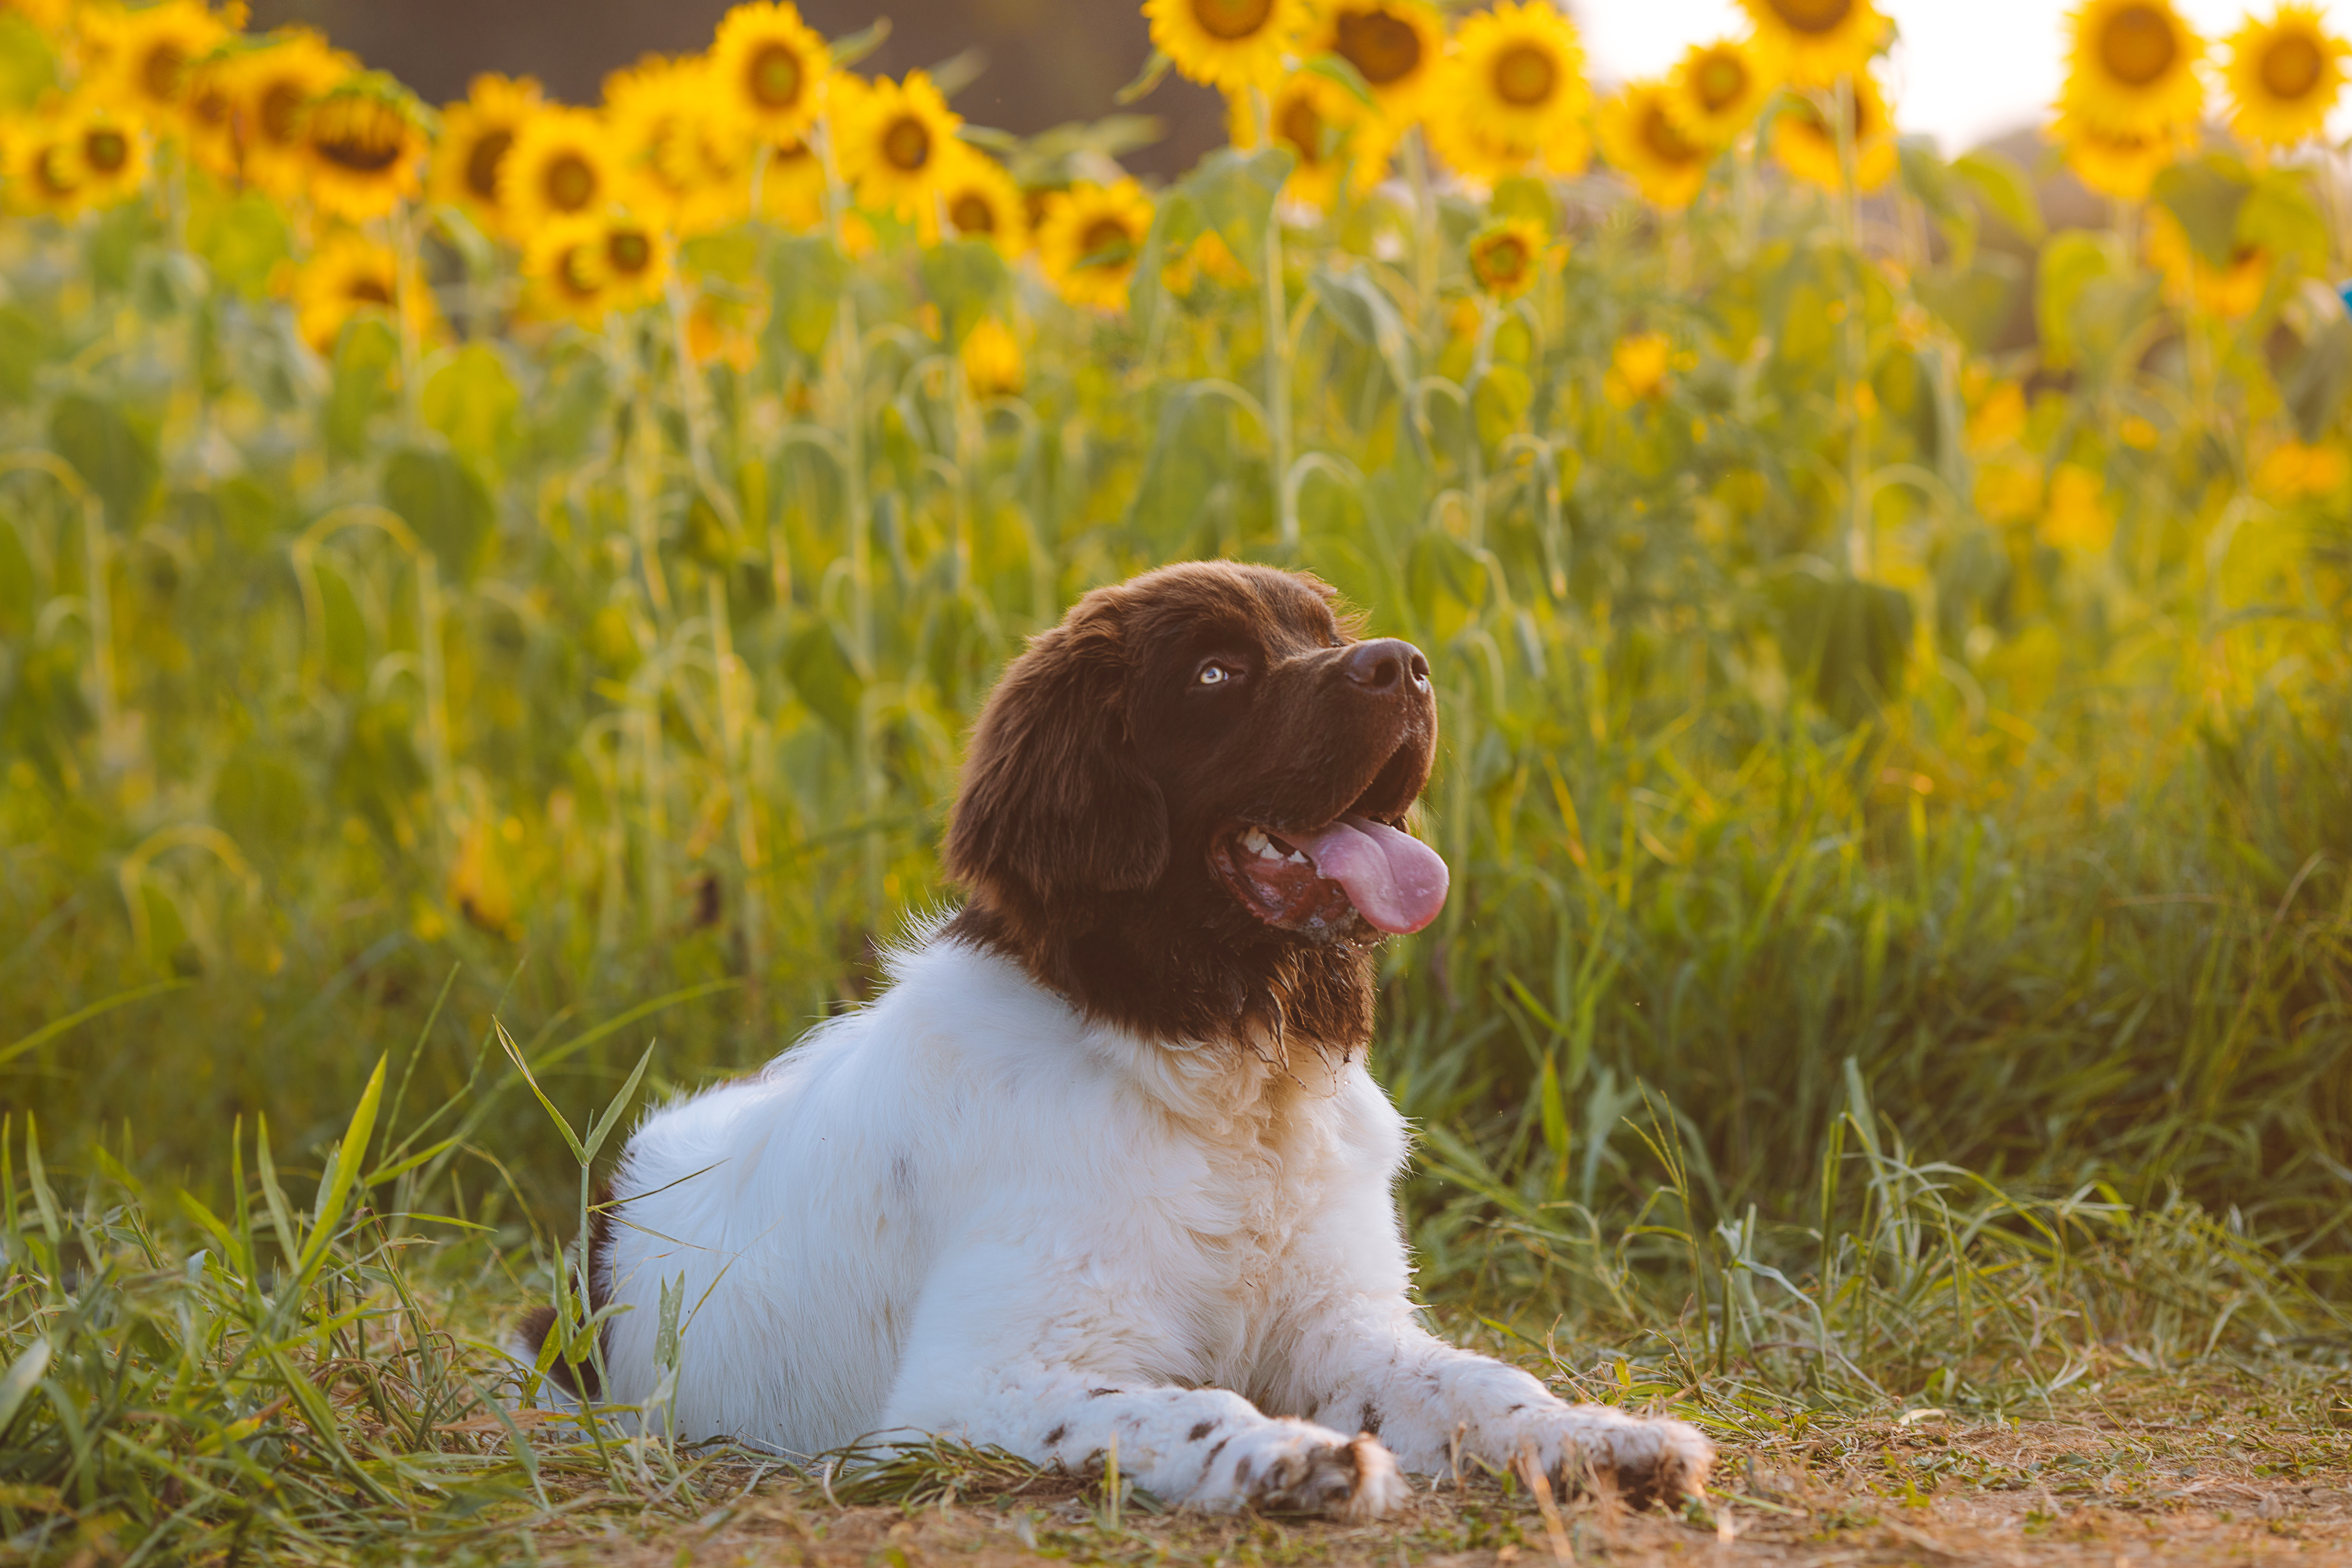 Dog Animal Pet Protruding-tongue Sunflowers Field